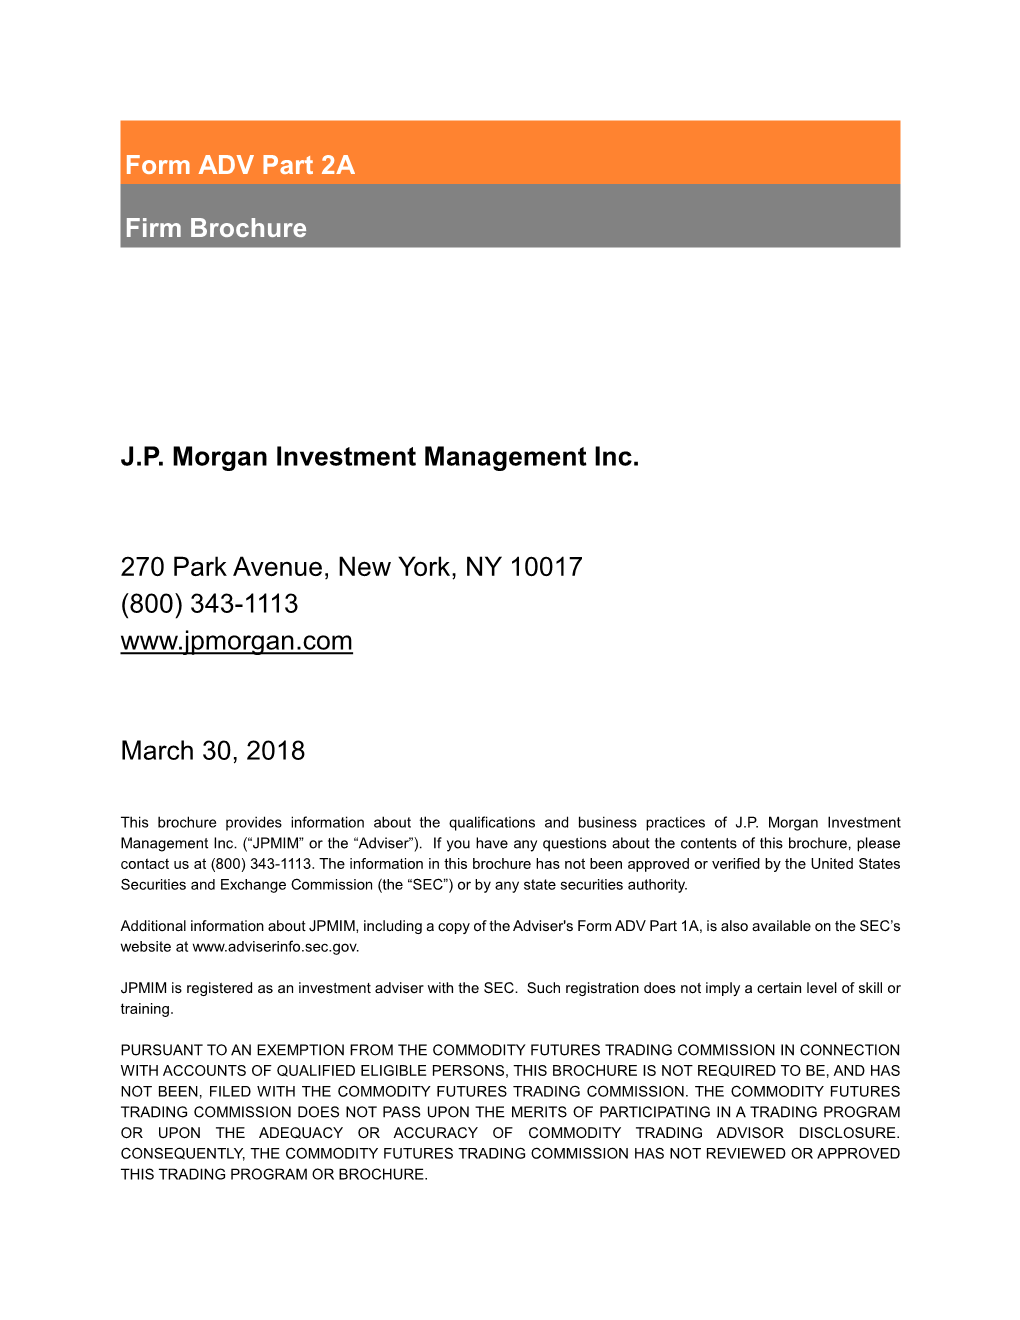 J.P. Morgan Investment Management Inc. 270 Park Avenue, New York